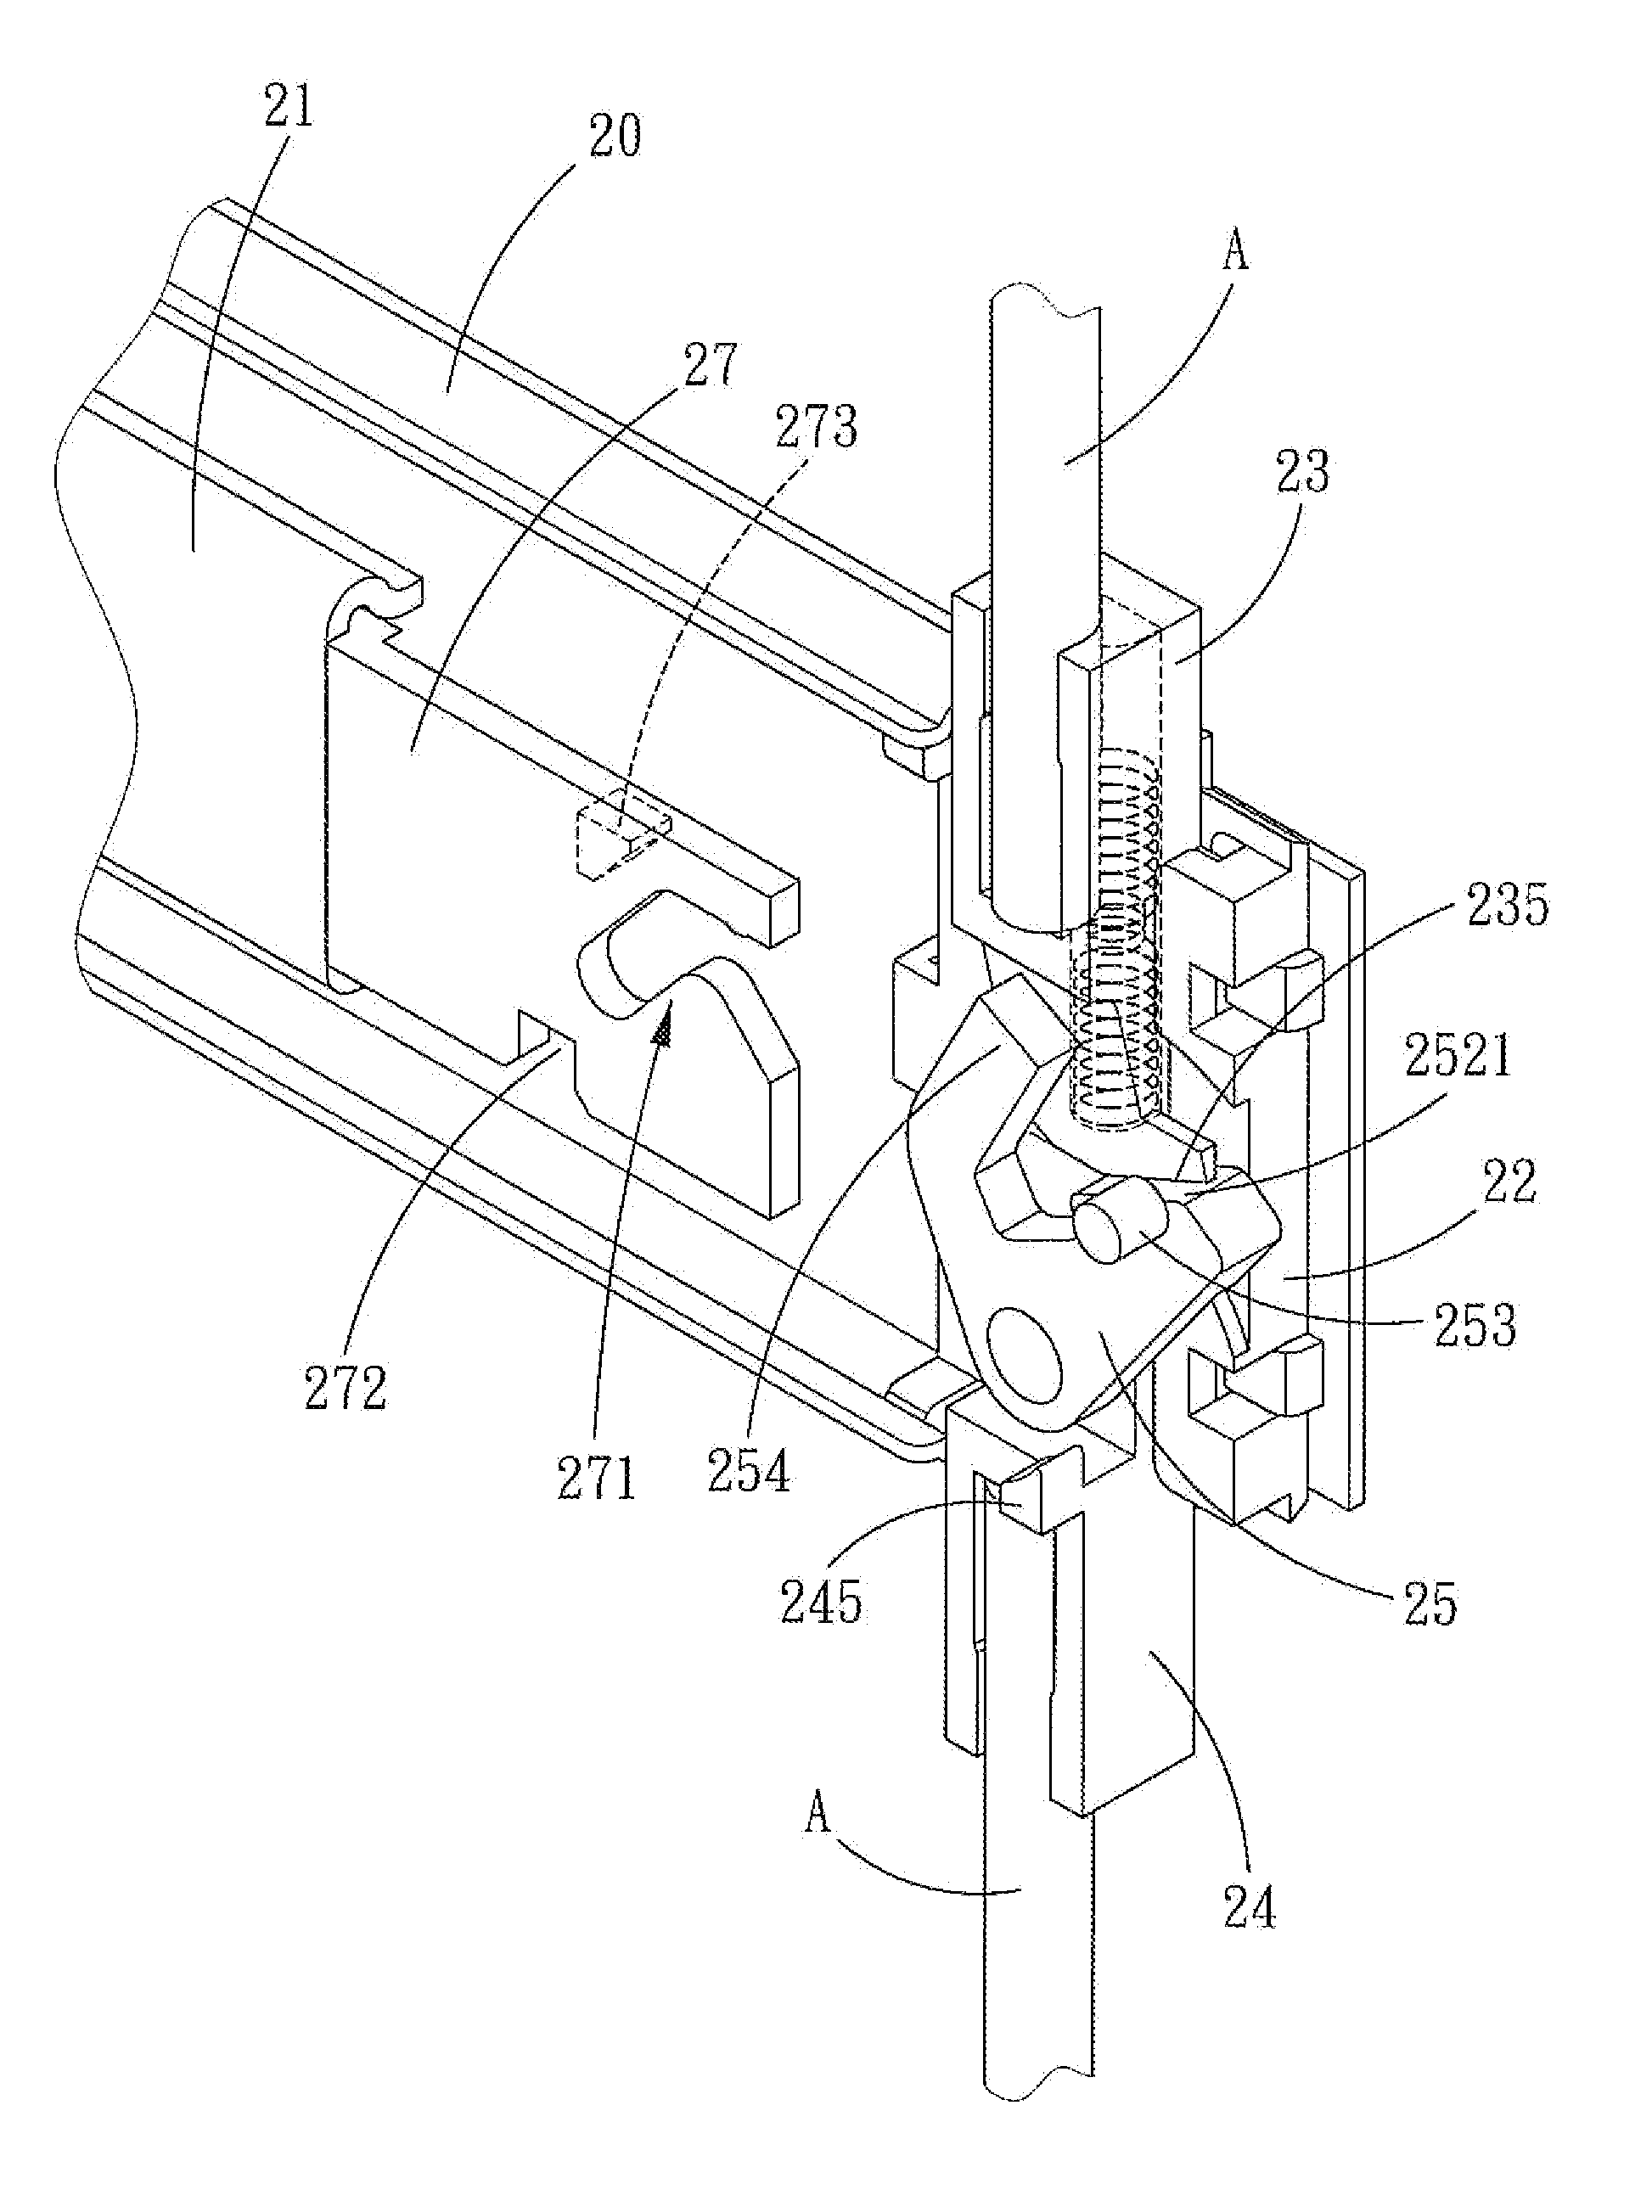 Interlocking Device for a Drawer Slide